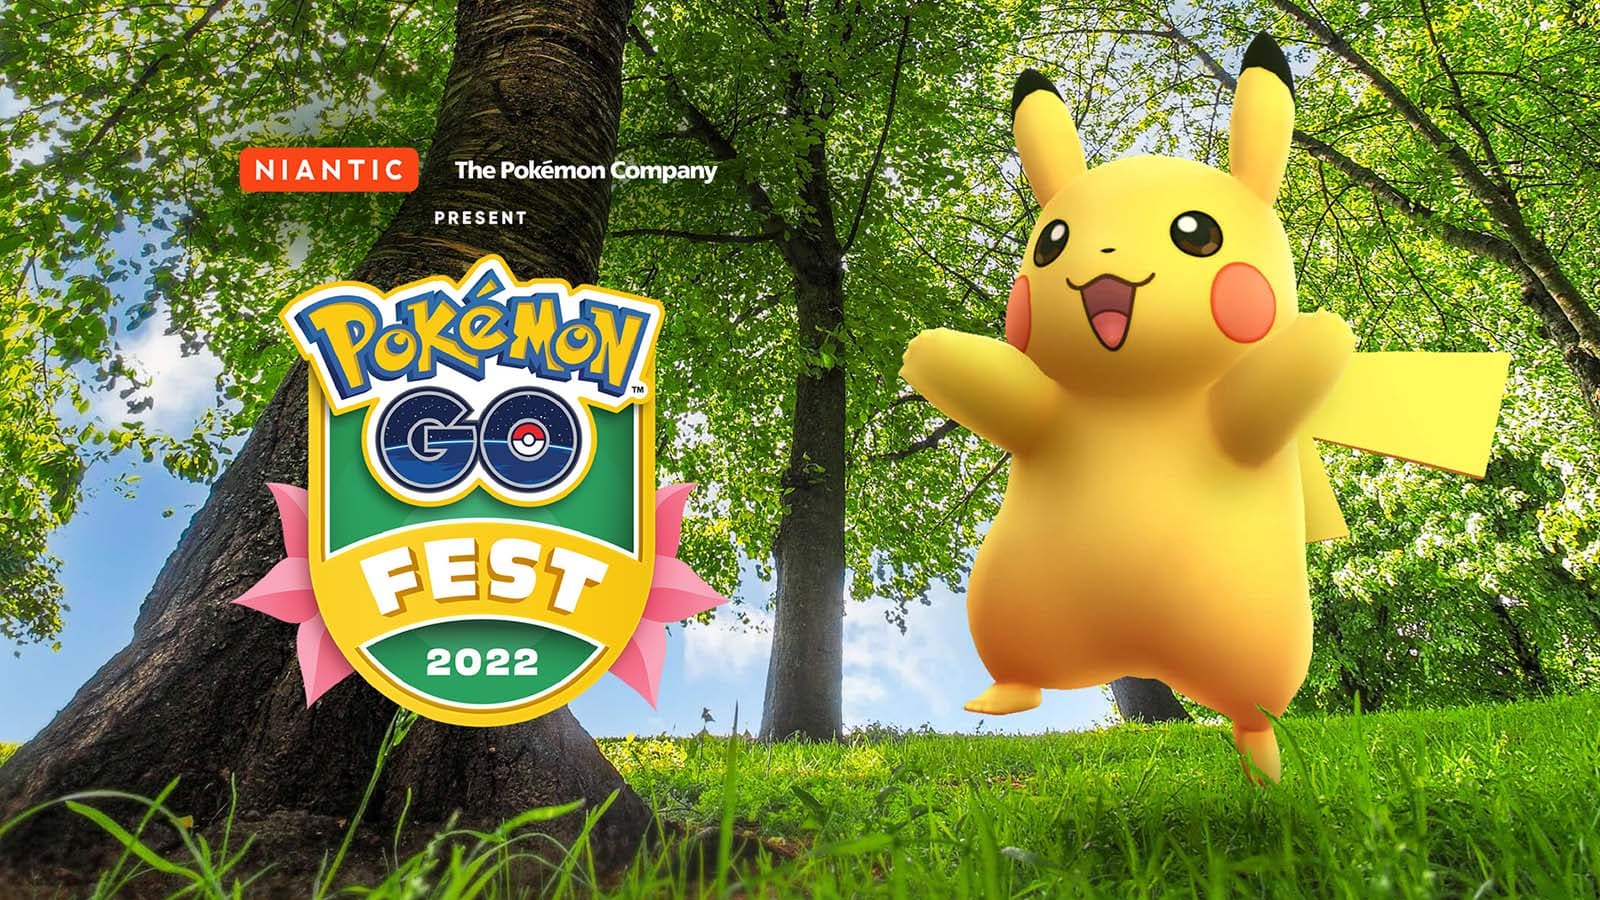 Pokemon Go fest 2022 schedule announced